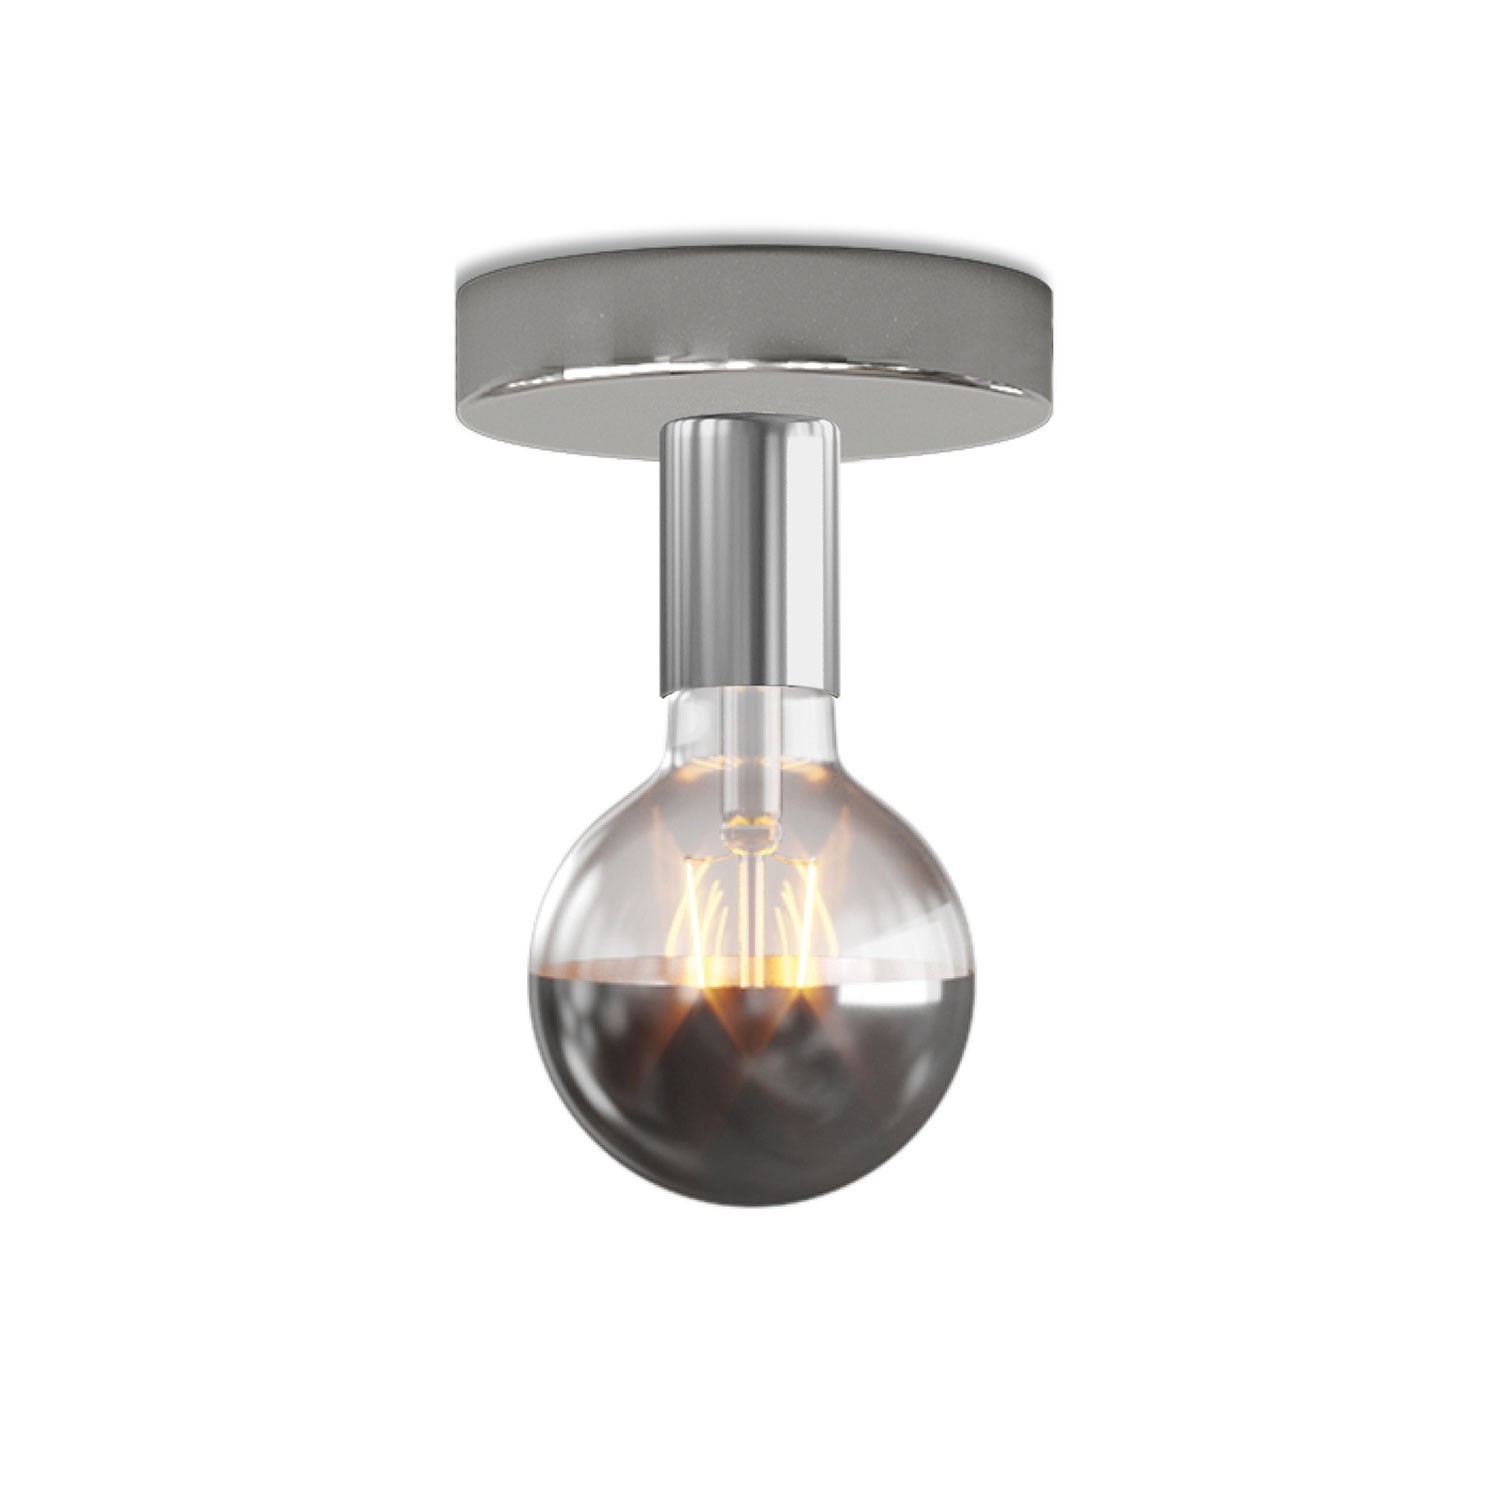 Fermaluce metalen lamp met Globe LED lichtbron